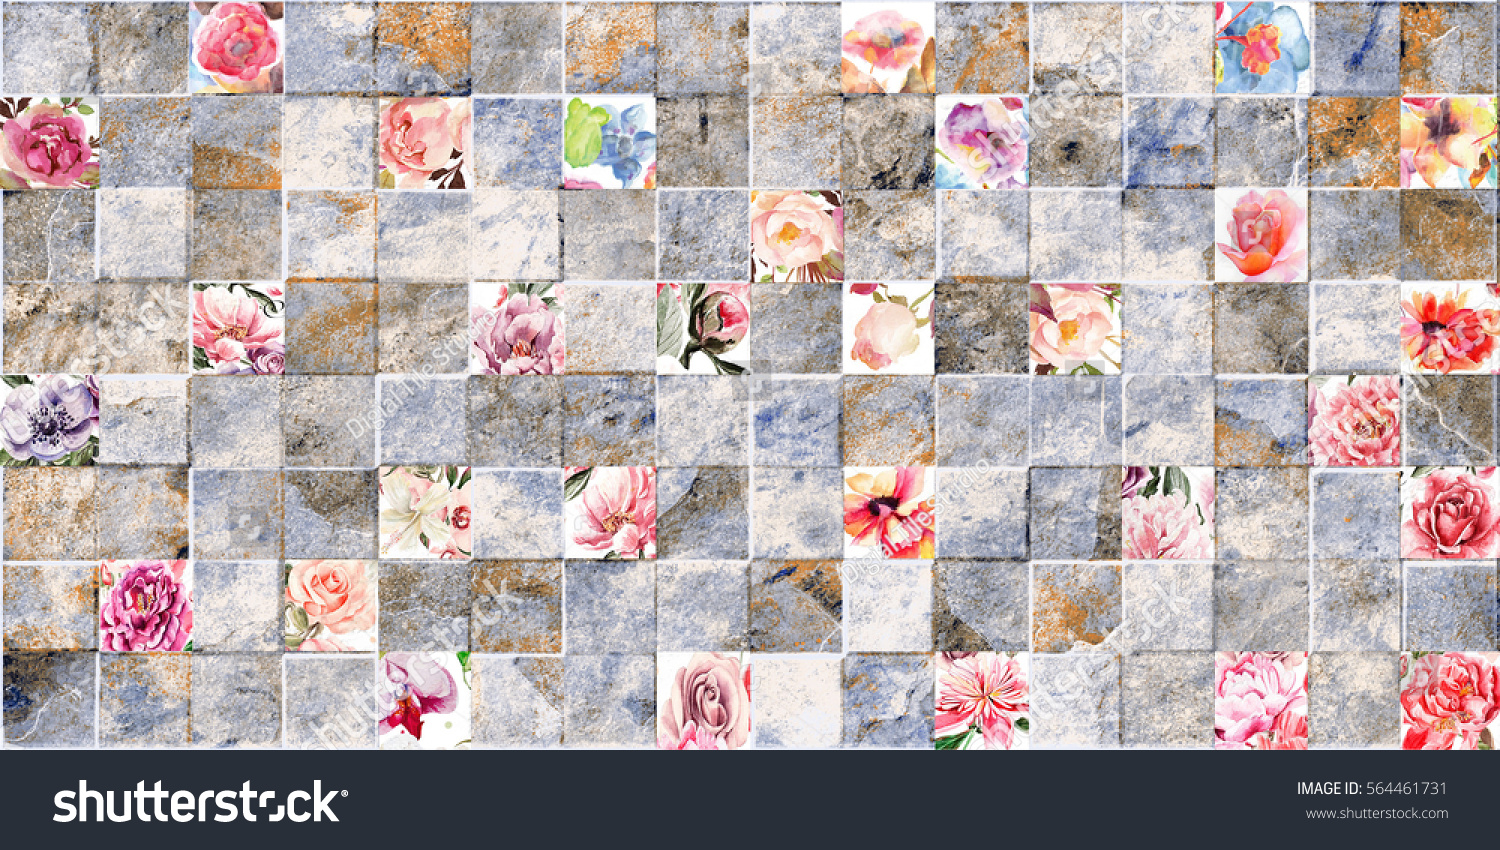 3d Tile Mosaic Decor Bathroom Backgrounds Textures Stock Image 564461731